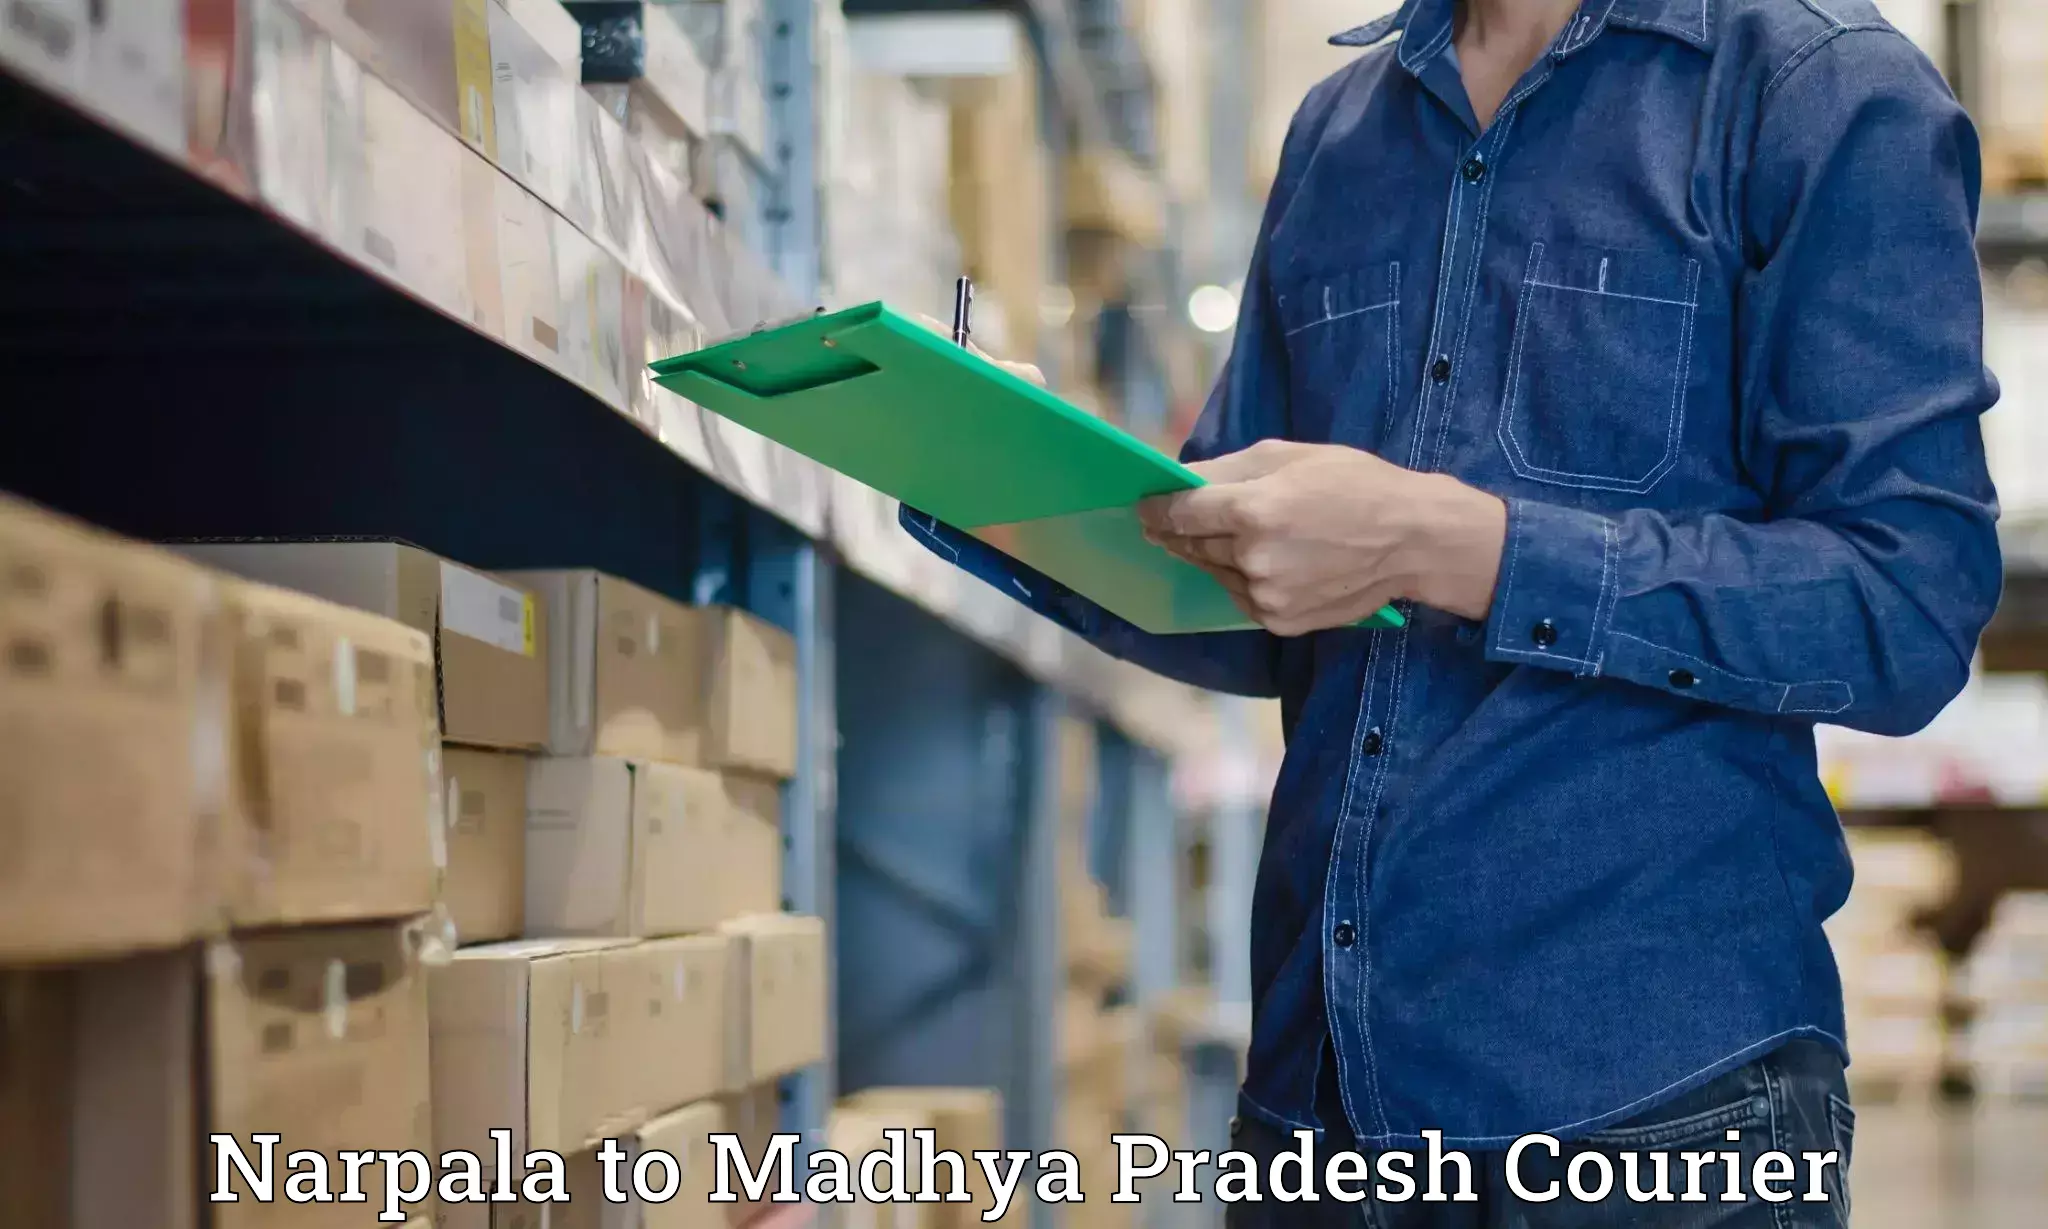 Courier service innovation Narpala to Vidisha